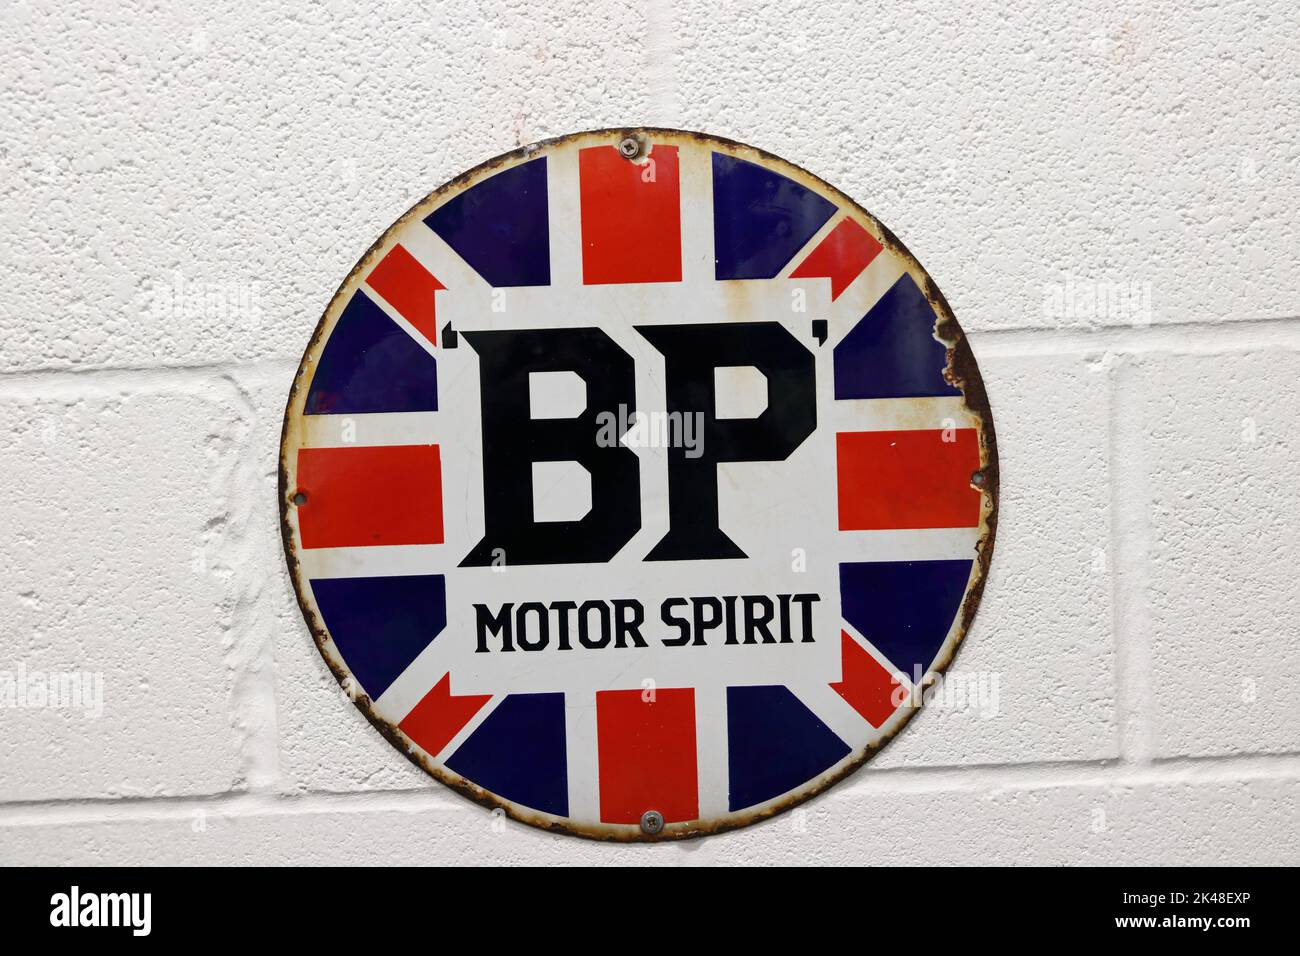 Old metal advertising plaque for BP Motor Spirit Stock Photo